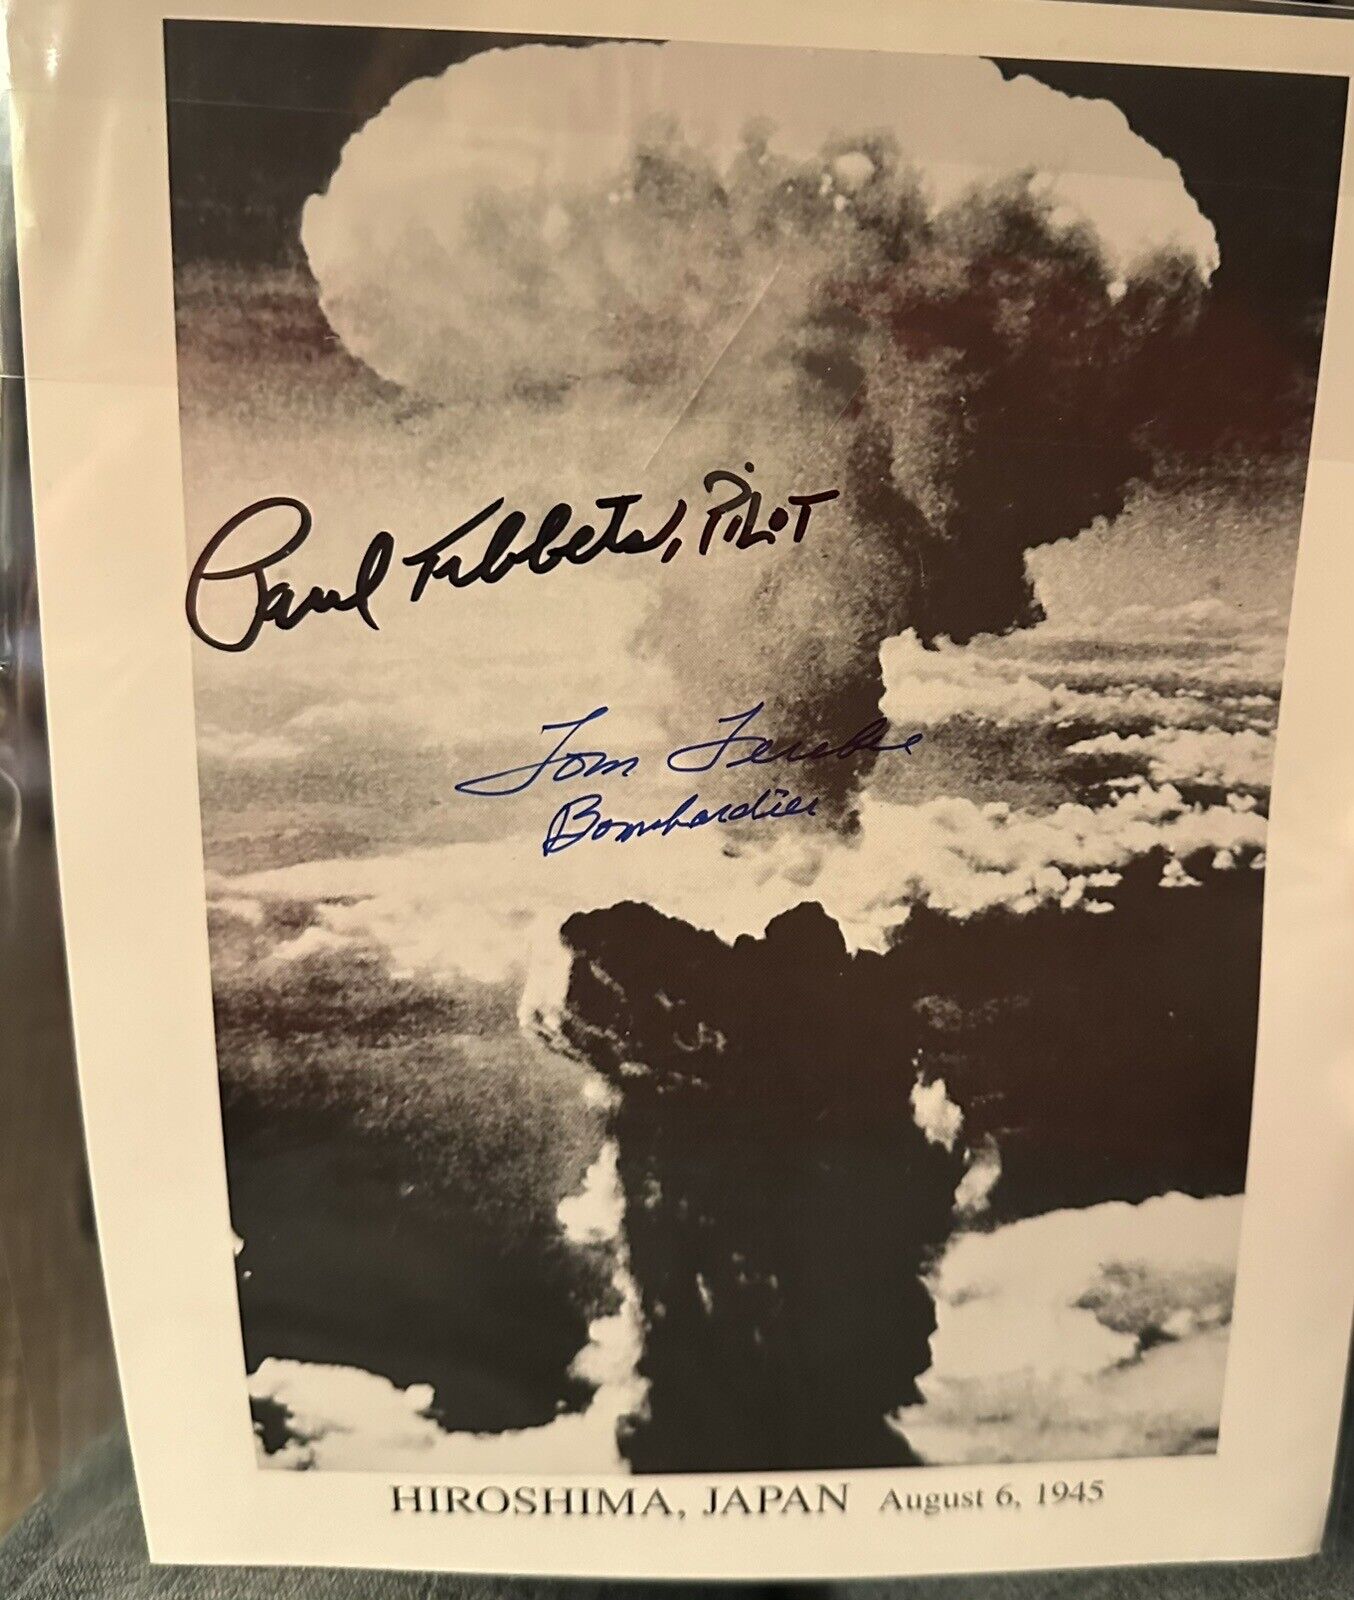 Enola Gay Pilot Paul Tibbets—Bombardier Thomas Ferebee Signed Photo Of Hiroshima